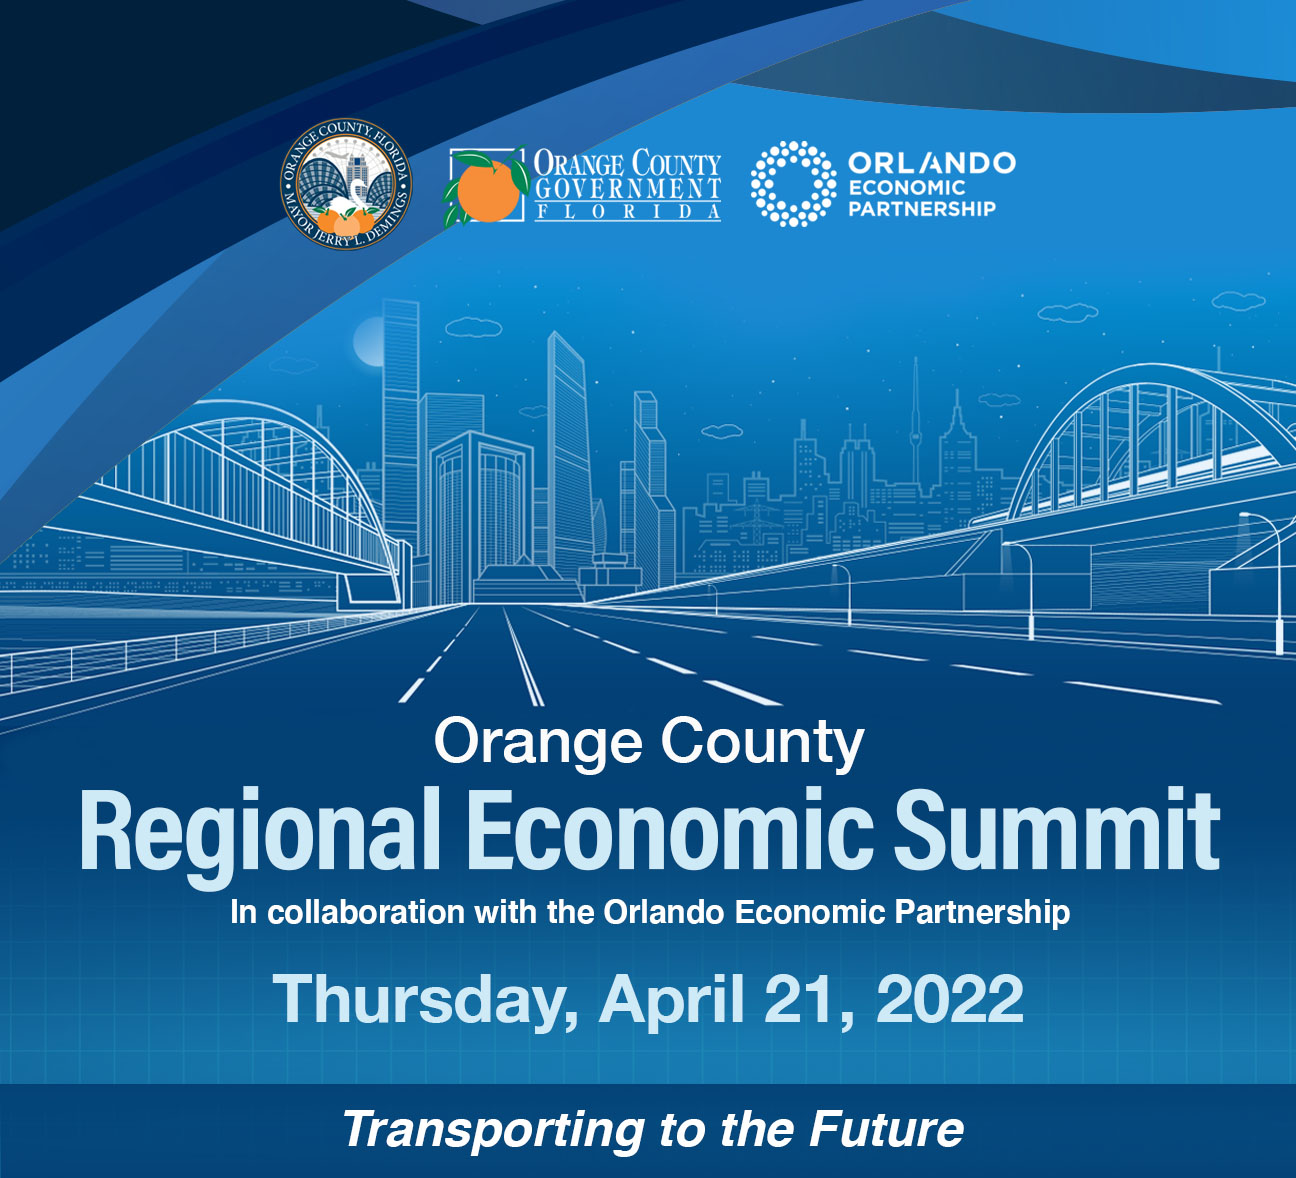 Orange County Regional Economic Summit - In collaboration with the Orlando Economic Partnership - Thursday April 21 2022